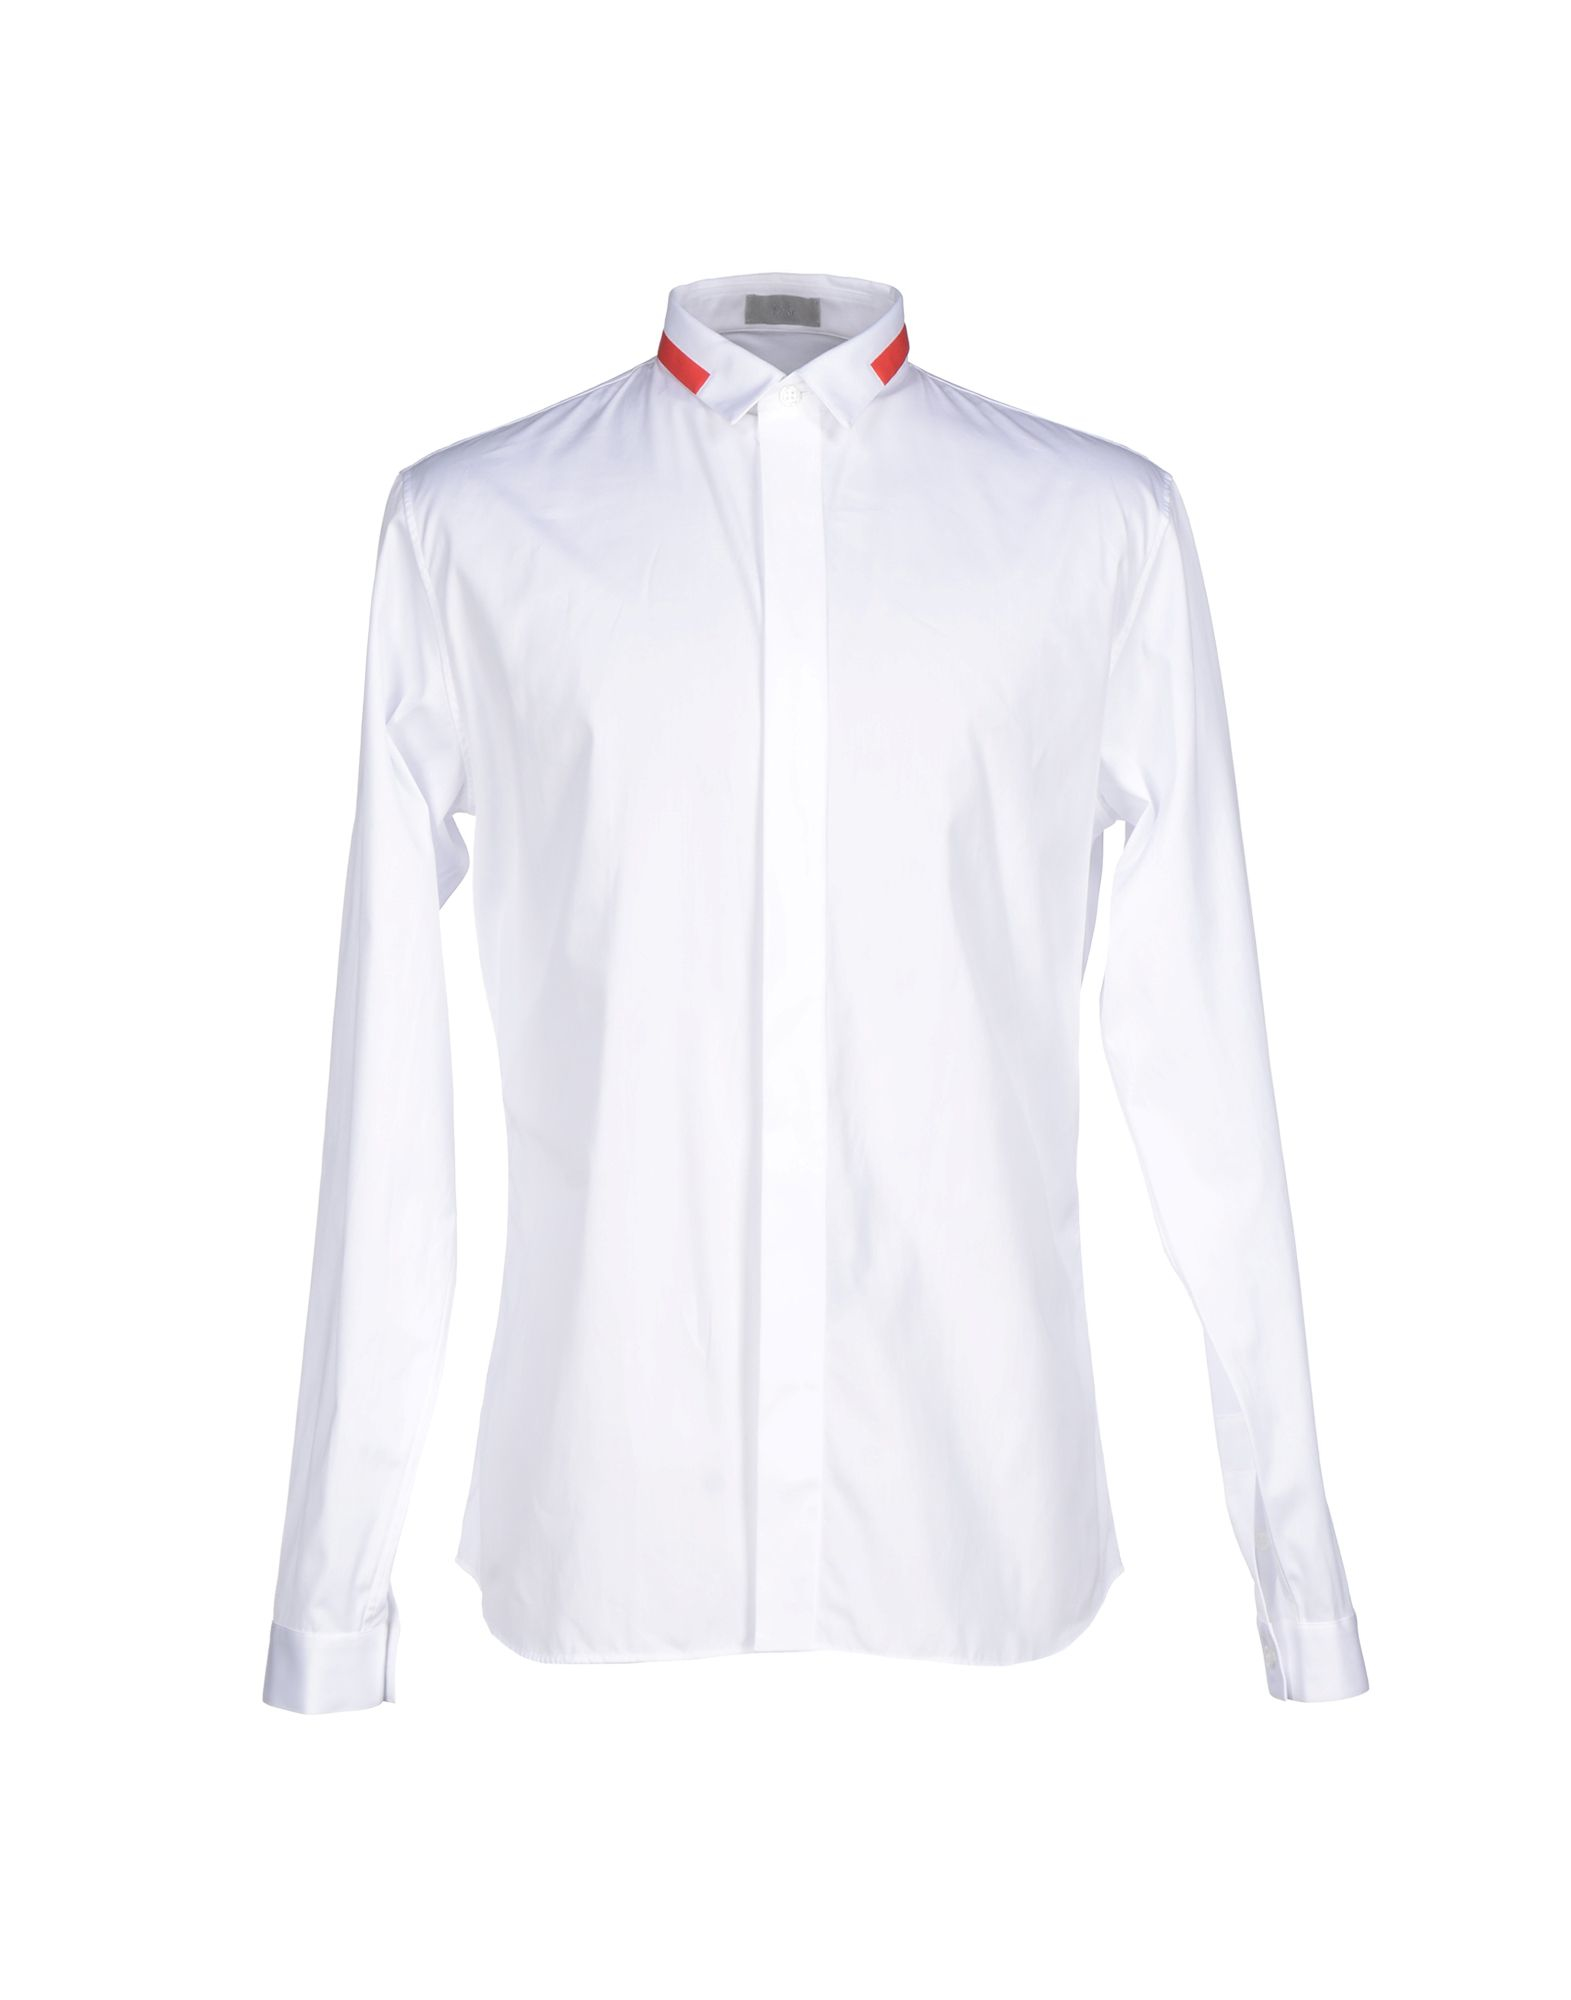 Lyst - Dior Homme Shirt in White for Men